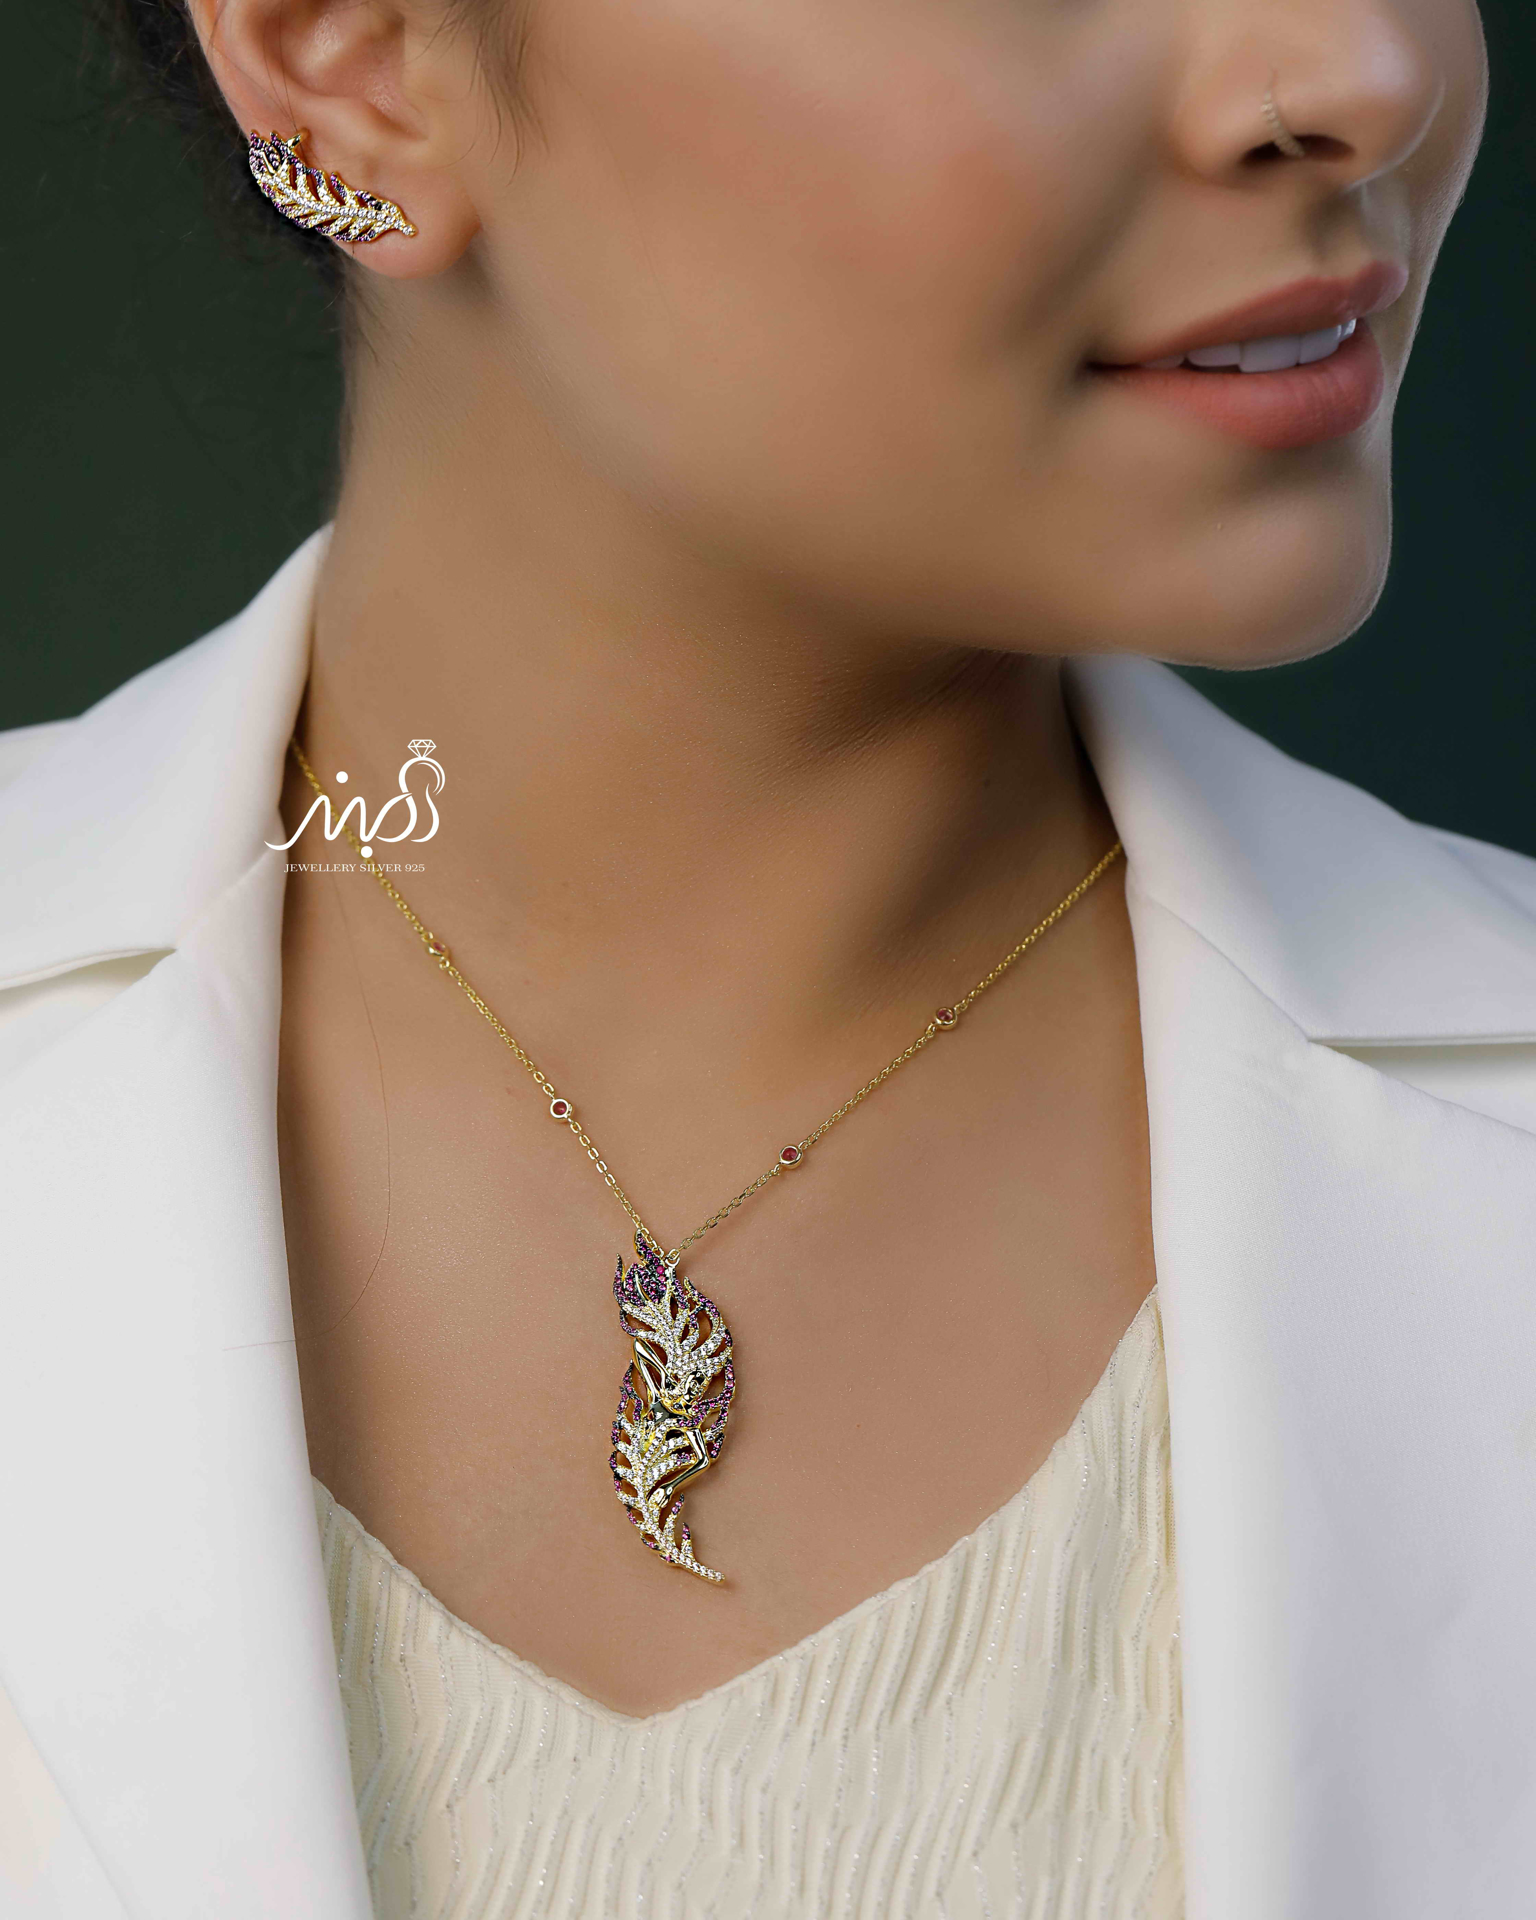 💍نیم ست جواهری لاكچري و خاص طلايي با نگين هاي بنفش، نقره عیار ۹۲۵(N_4202)